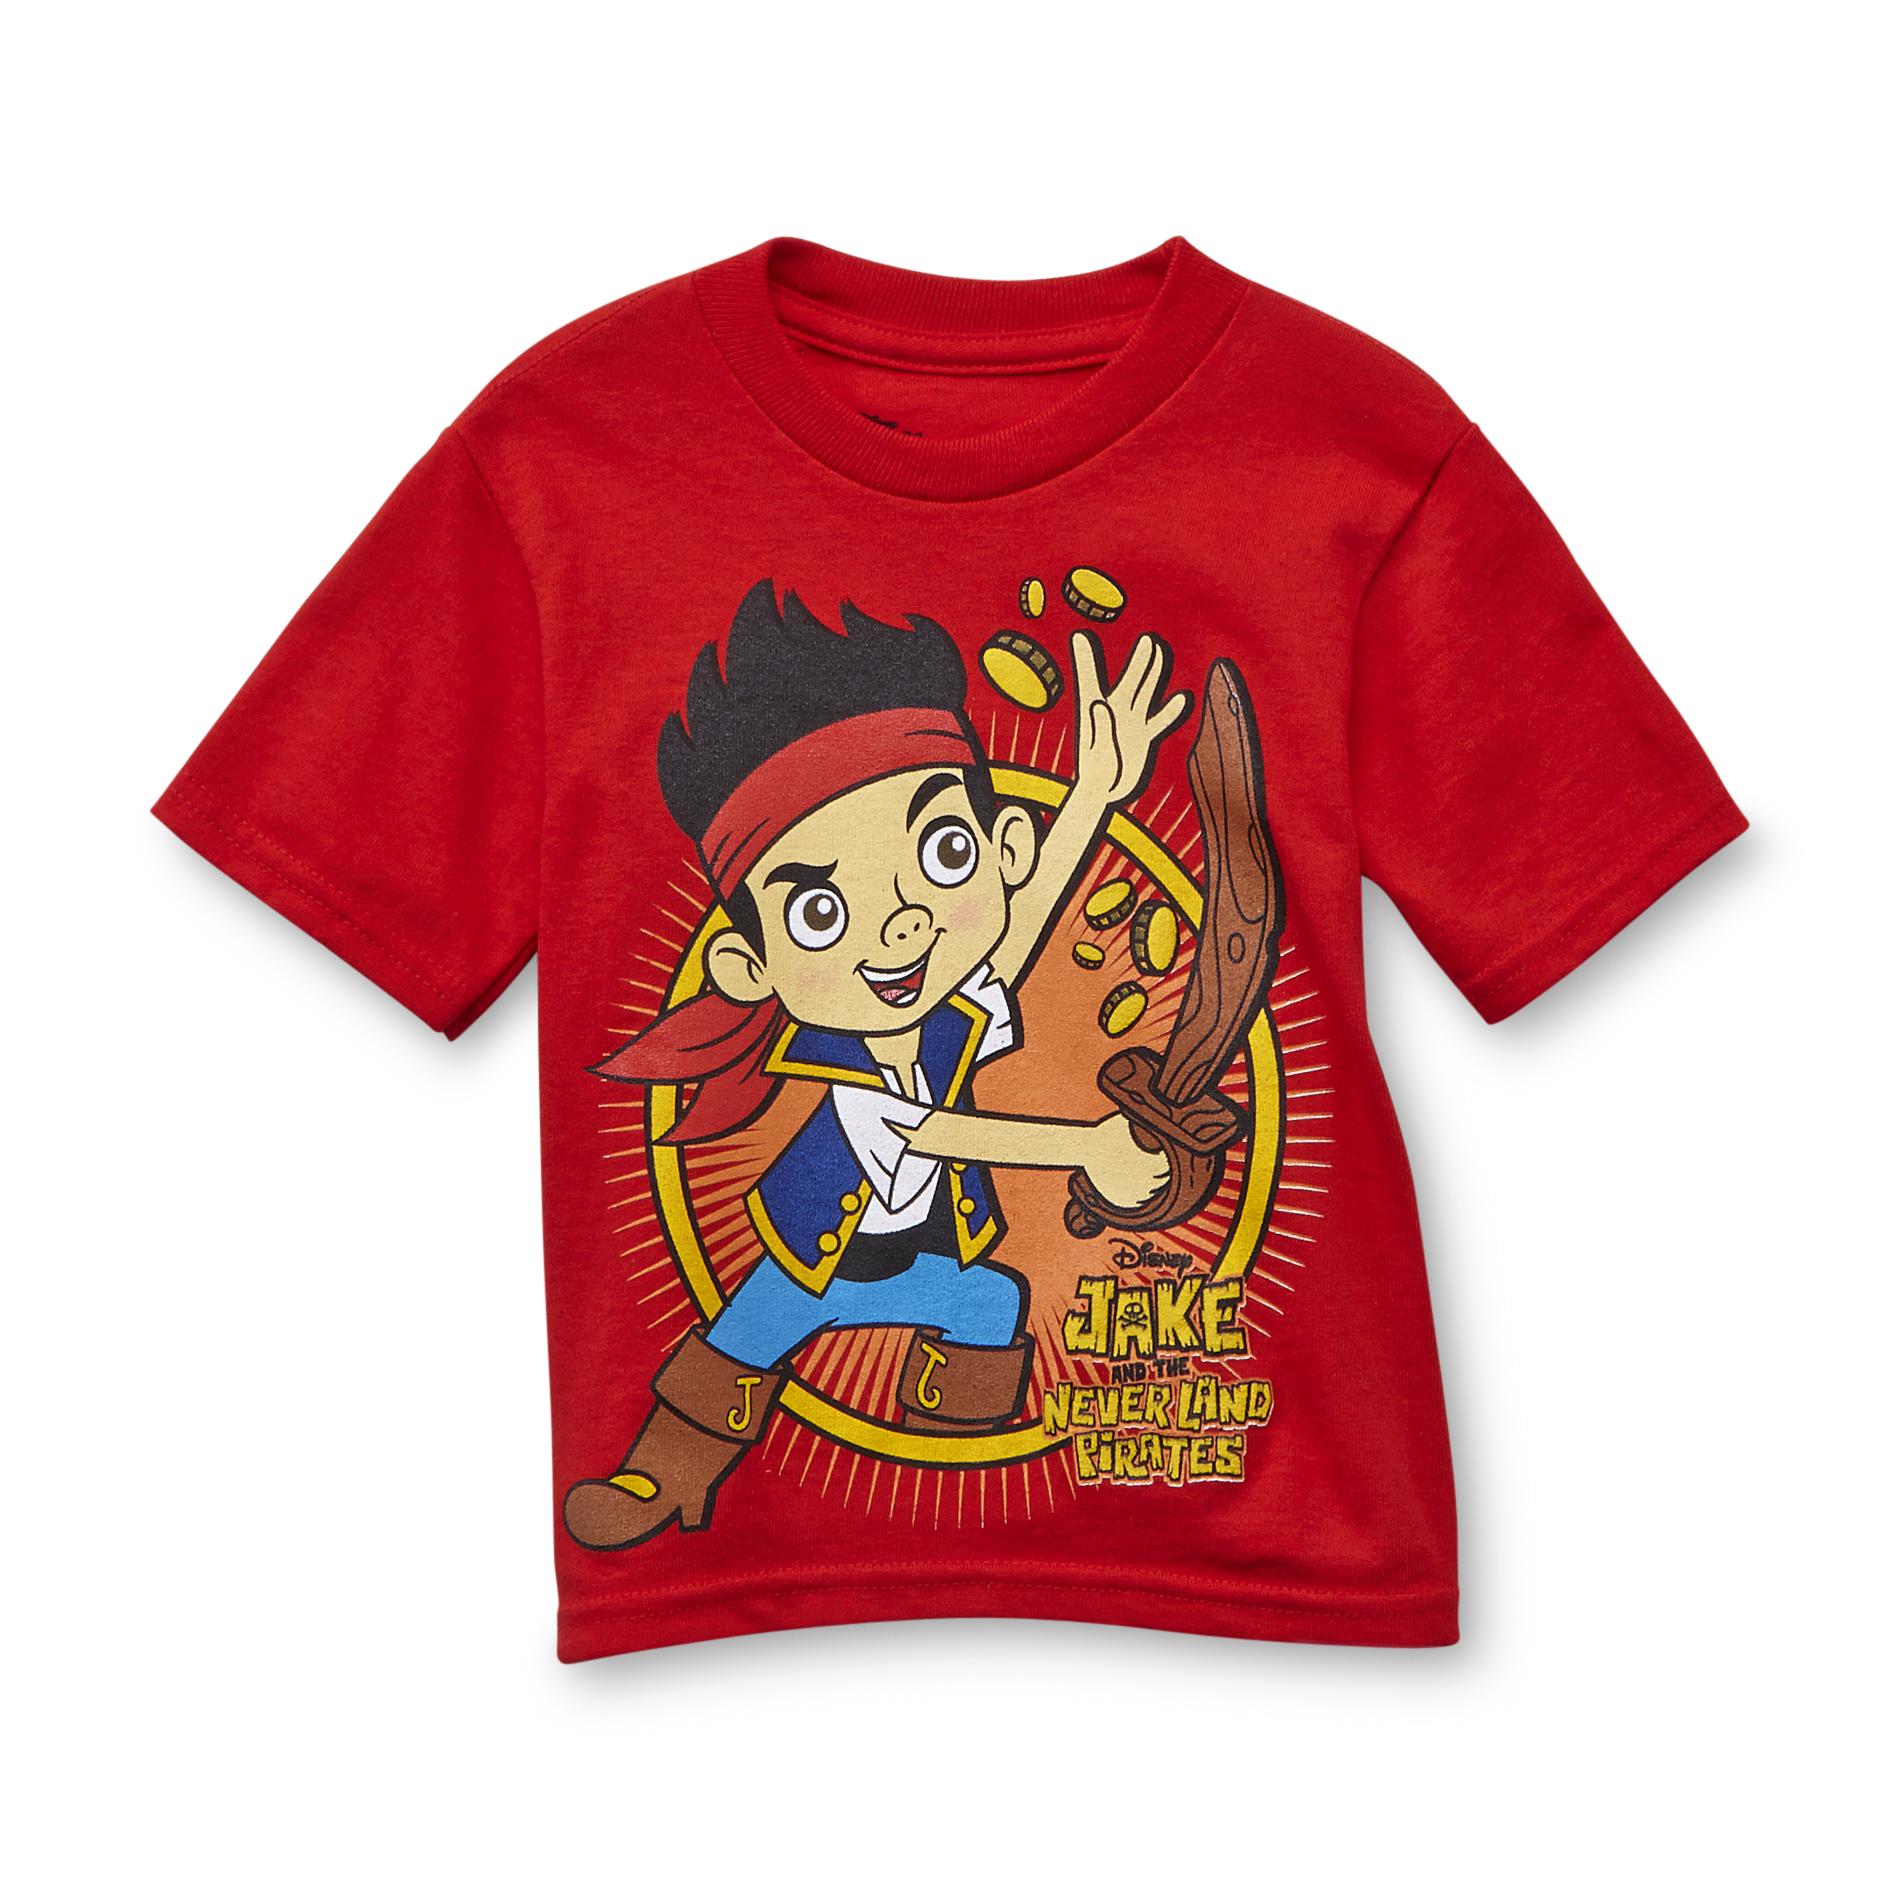 Disney Jake & the Never Land Pirates Toddler Boy's T-Shirt